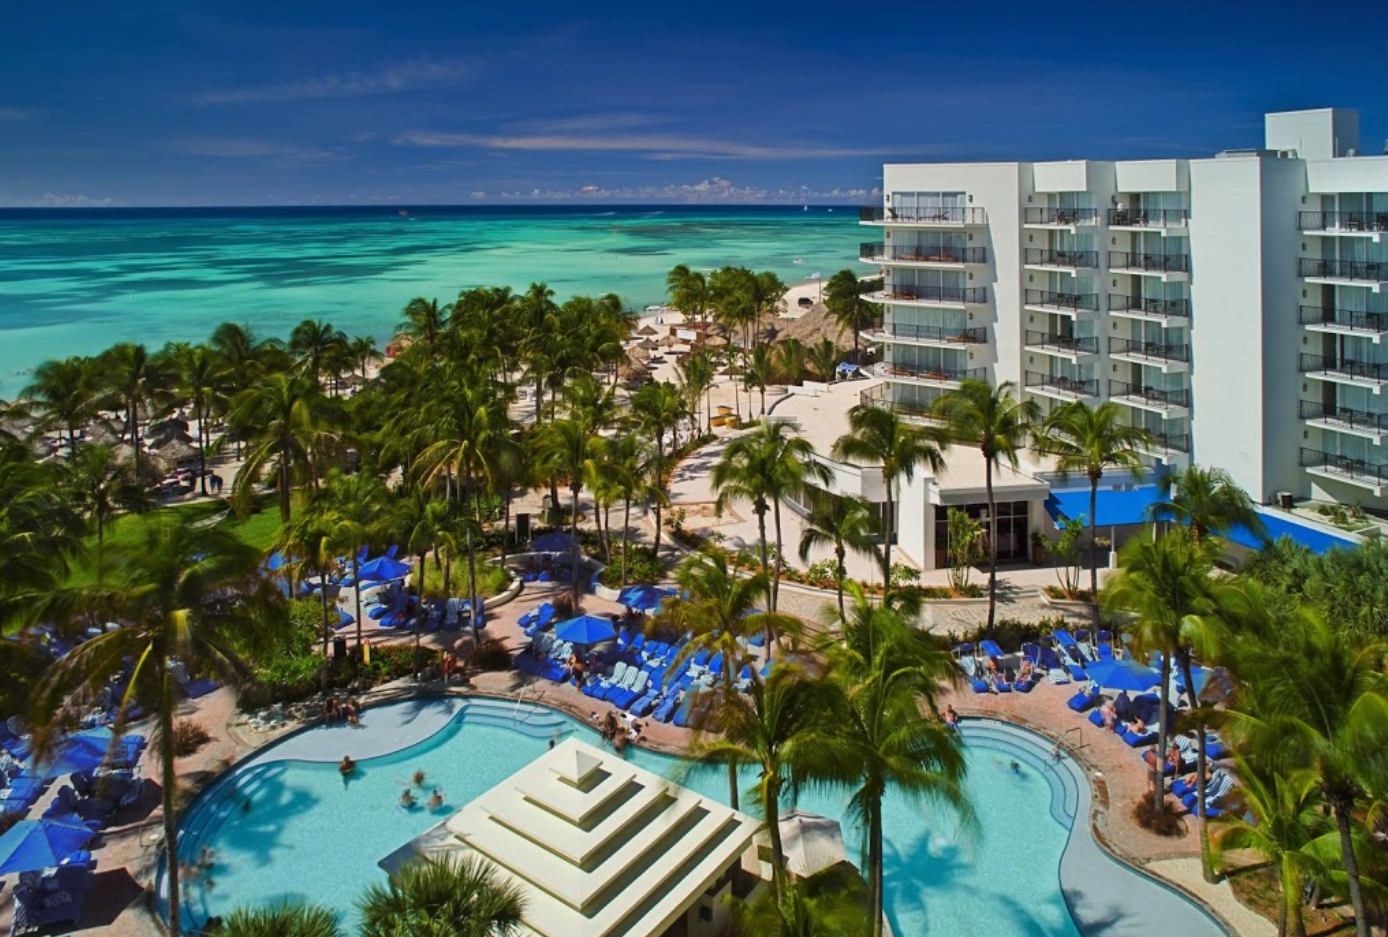 Aruba, Vacation, Caribbean resorts, Hotels, one happy island, travel, weddings, destination weddings